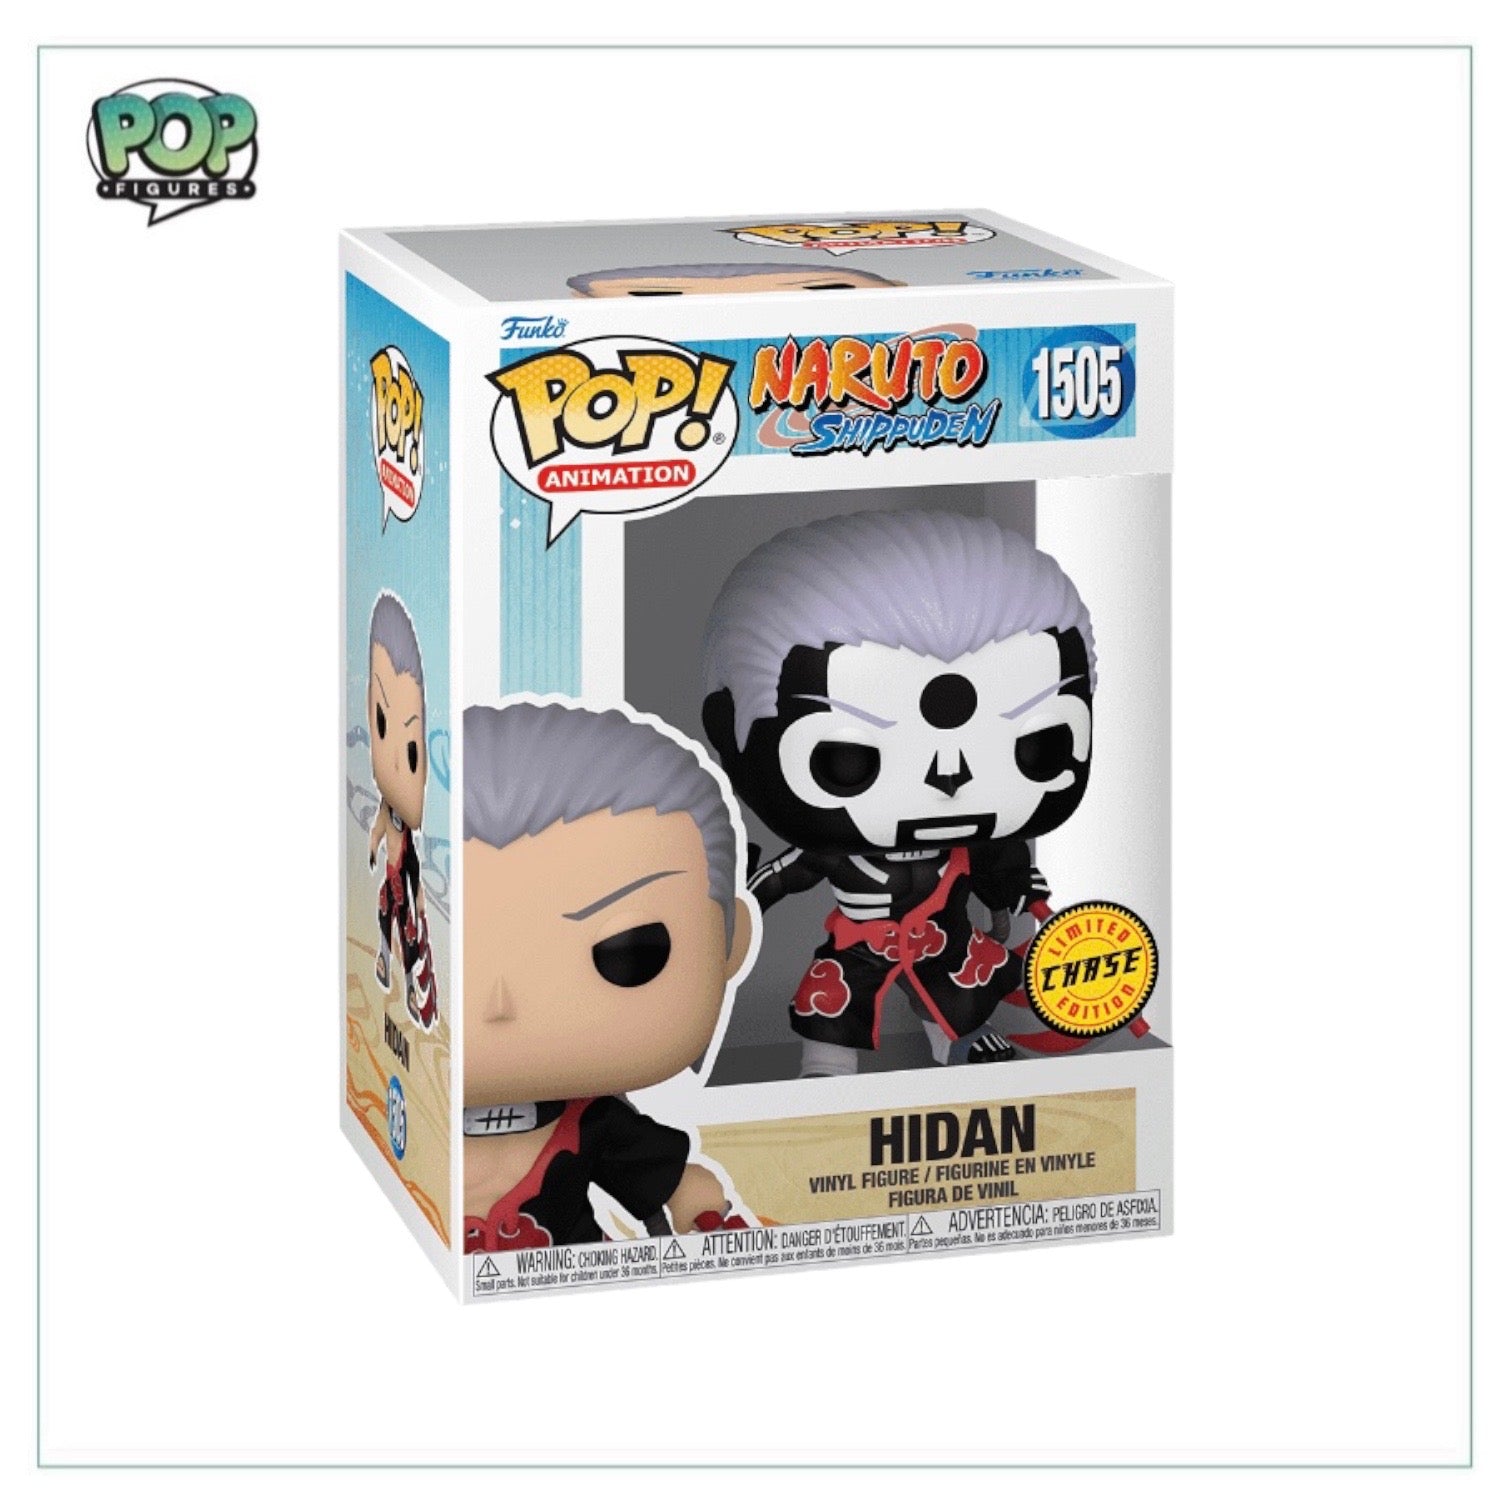 Hidan #1505 (Chase) Funko Pop! - Naruto Shippuden